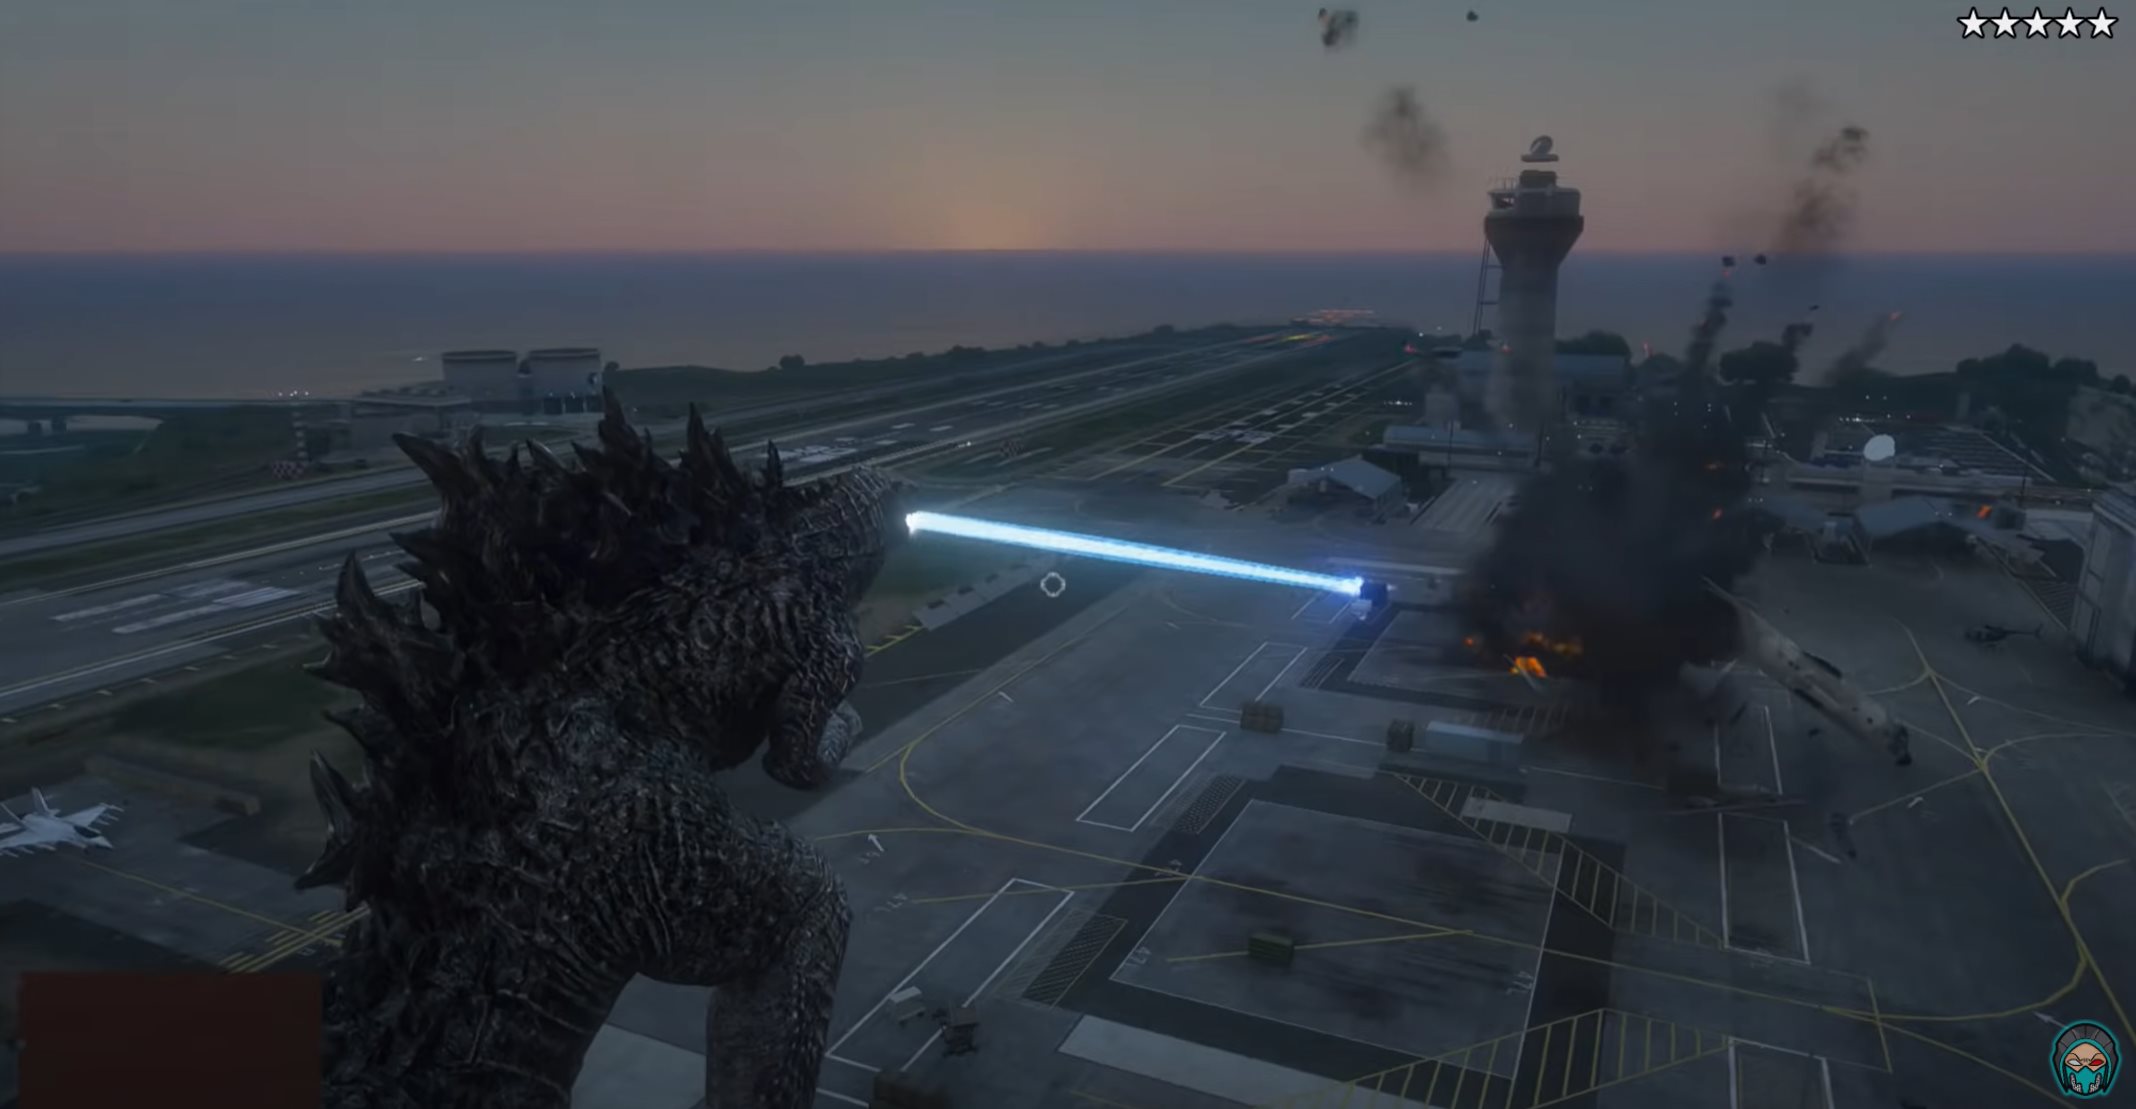 Insane Godzilla GTA 5 Mod Lets You Wreak Havoc in Los Santos - autoevolution